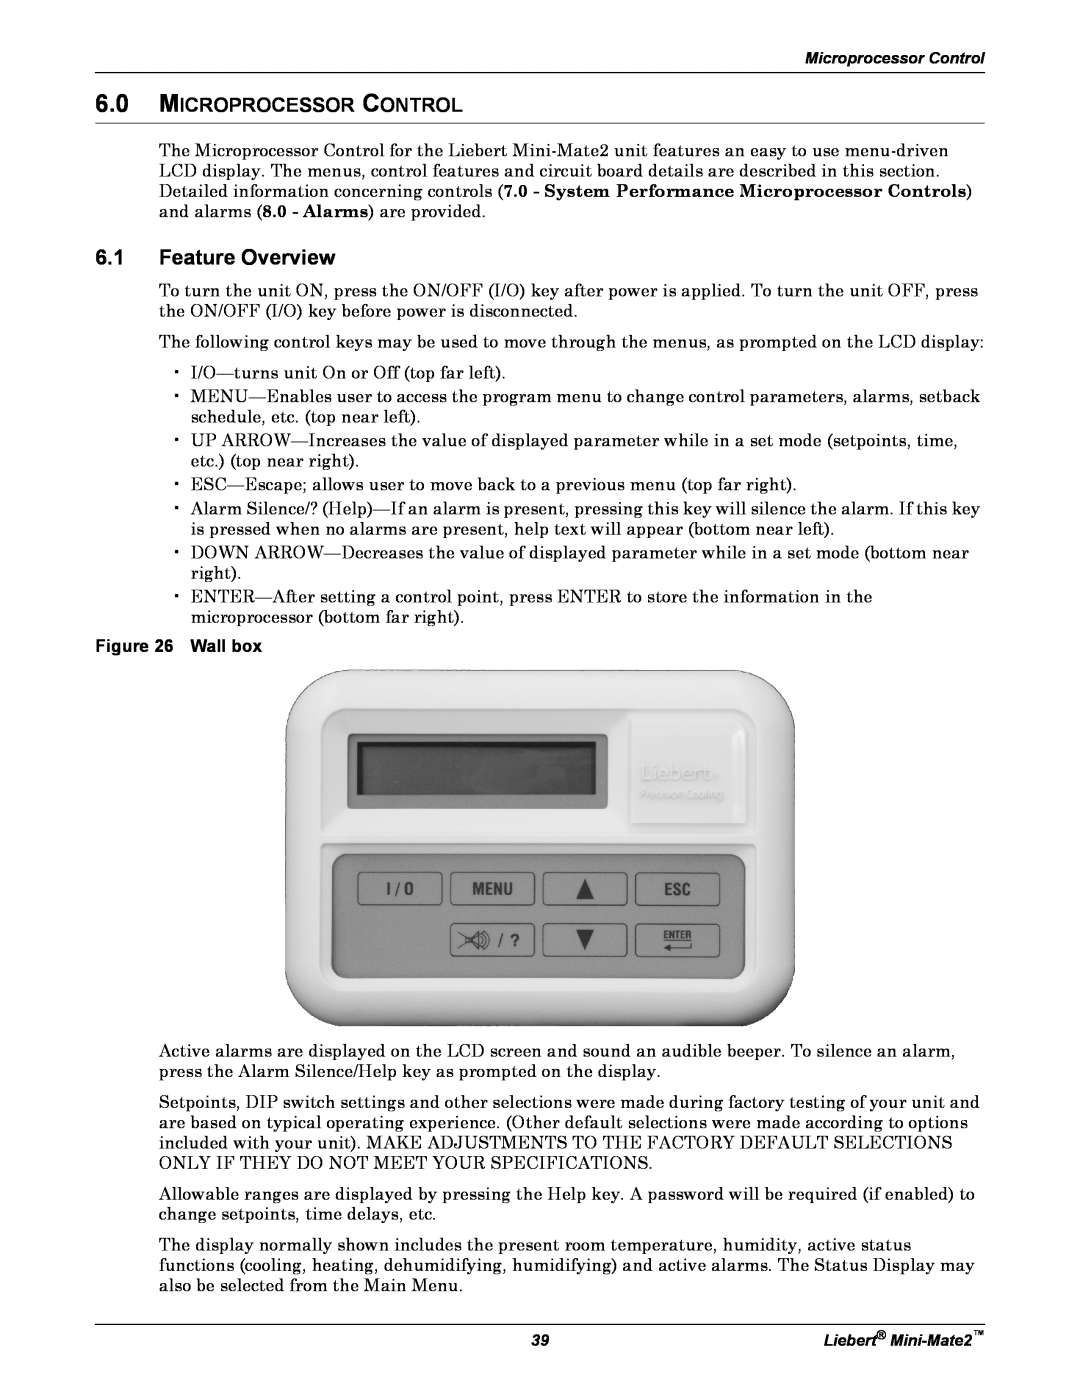 Emerson MINI-MATE2 user manual 6.1Feature Overview, 6.0MICROPROCESSOR CONTROL 